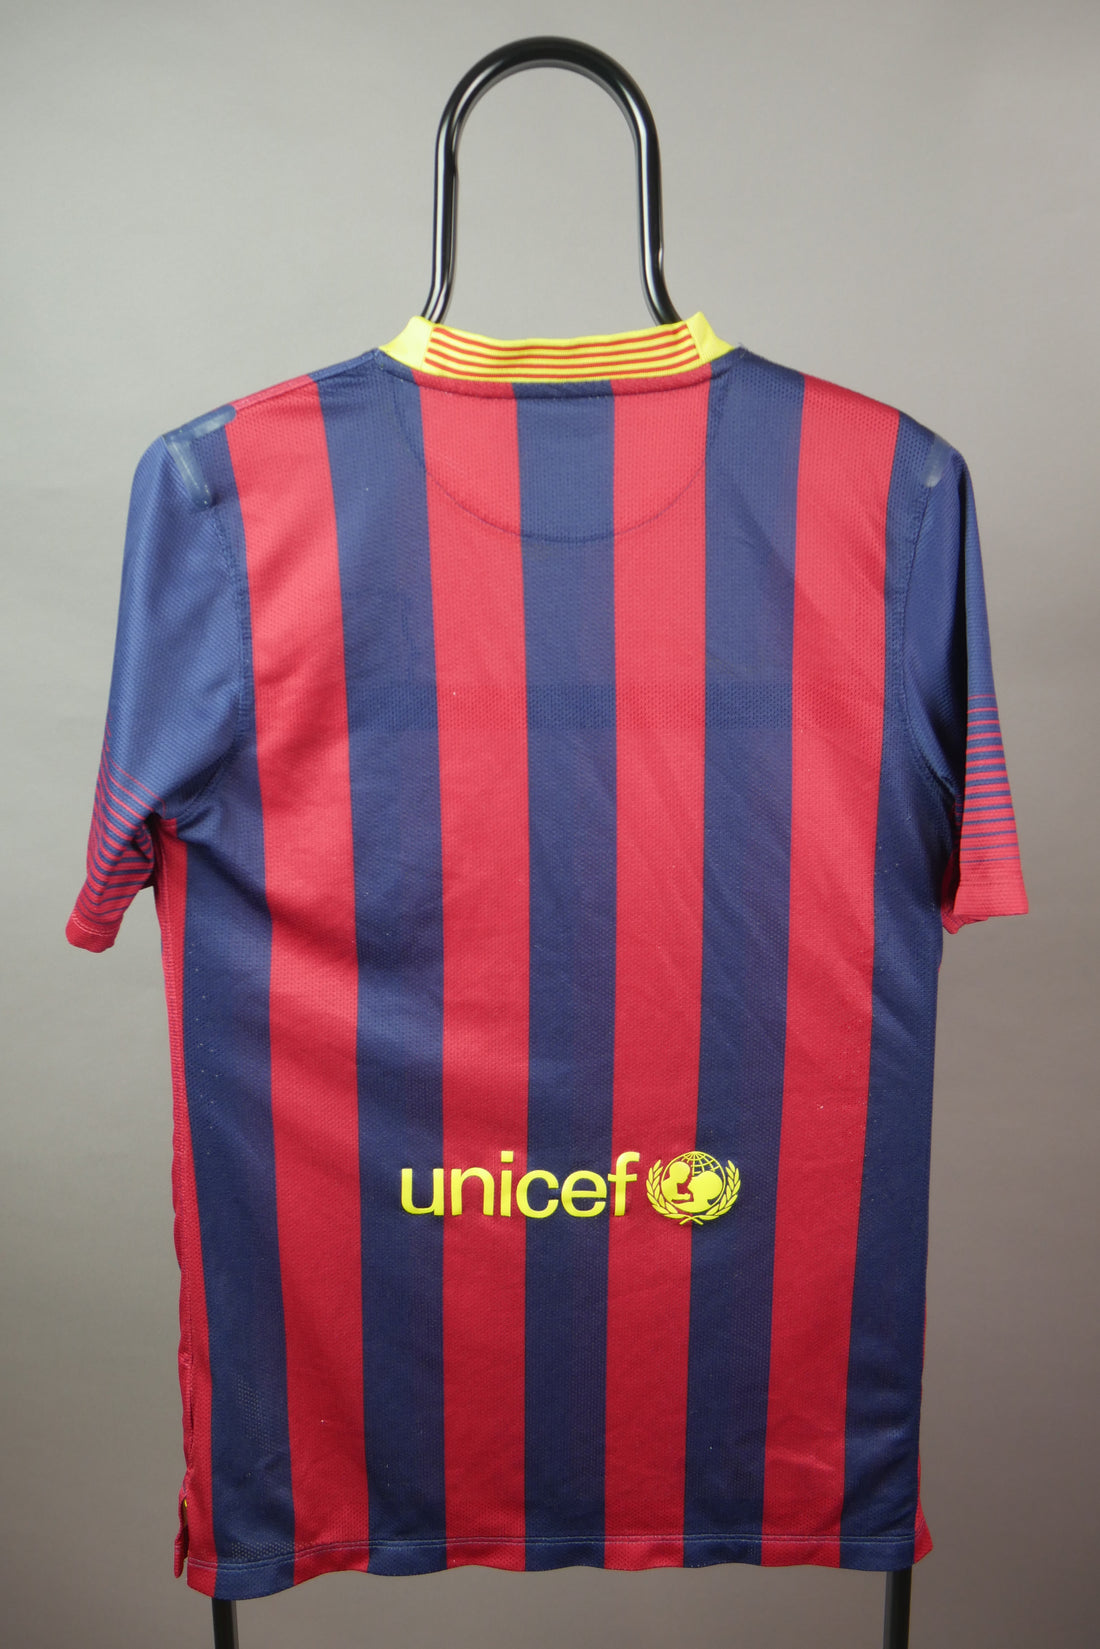 The Barcelona FC Shirt (S)